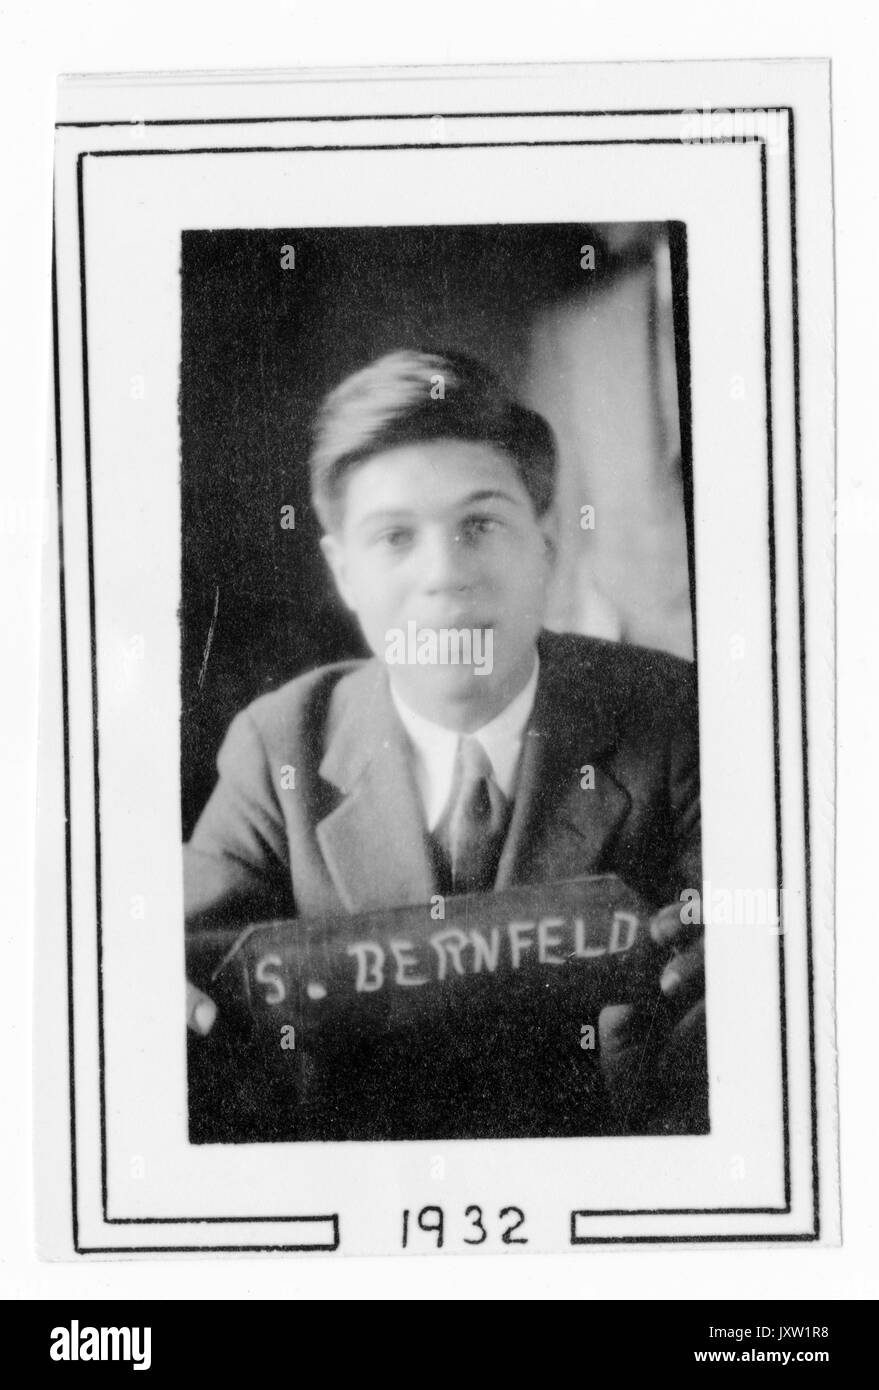 Salem Bernfeld, portrait Fotografie, Brustkorb, Gesicht, c 20 Jahre alter, 1930. Stockfoto